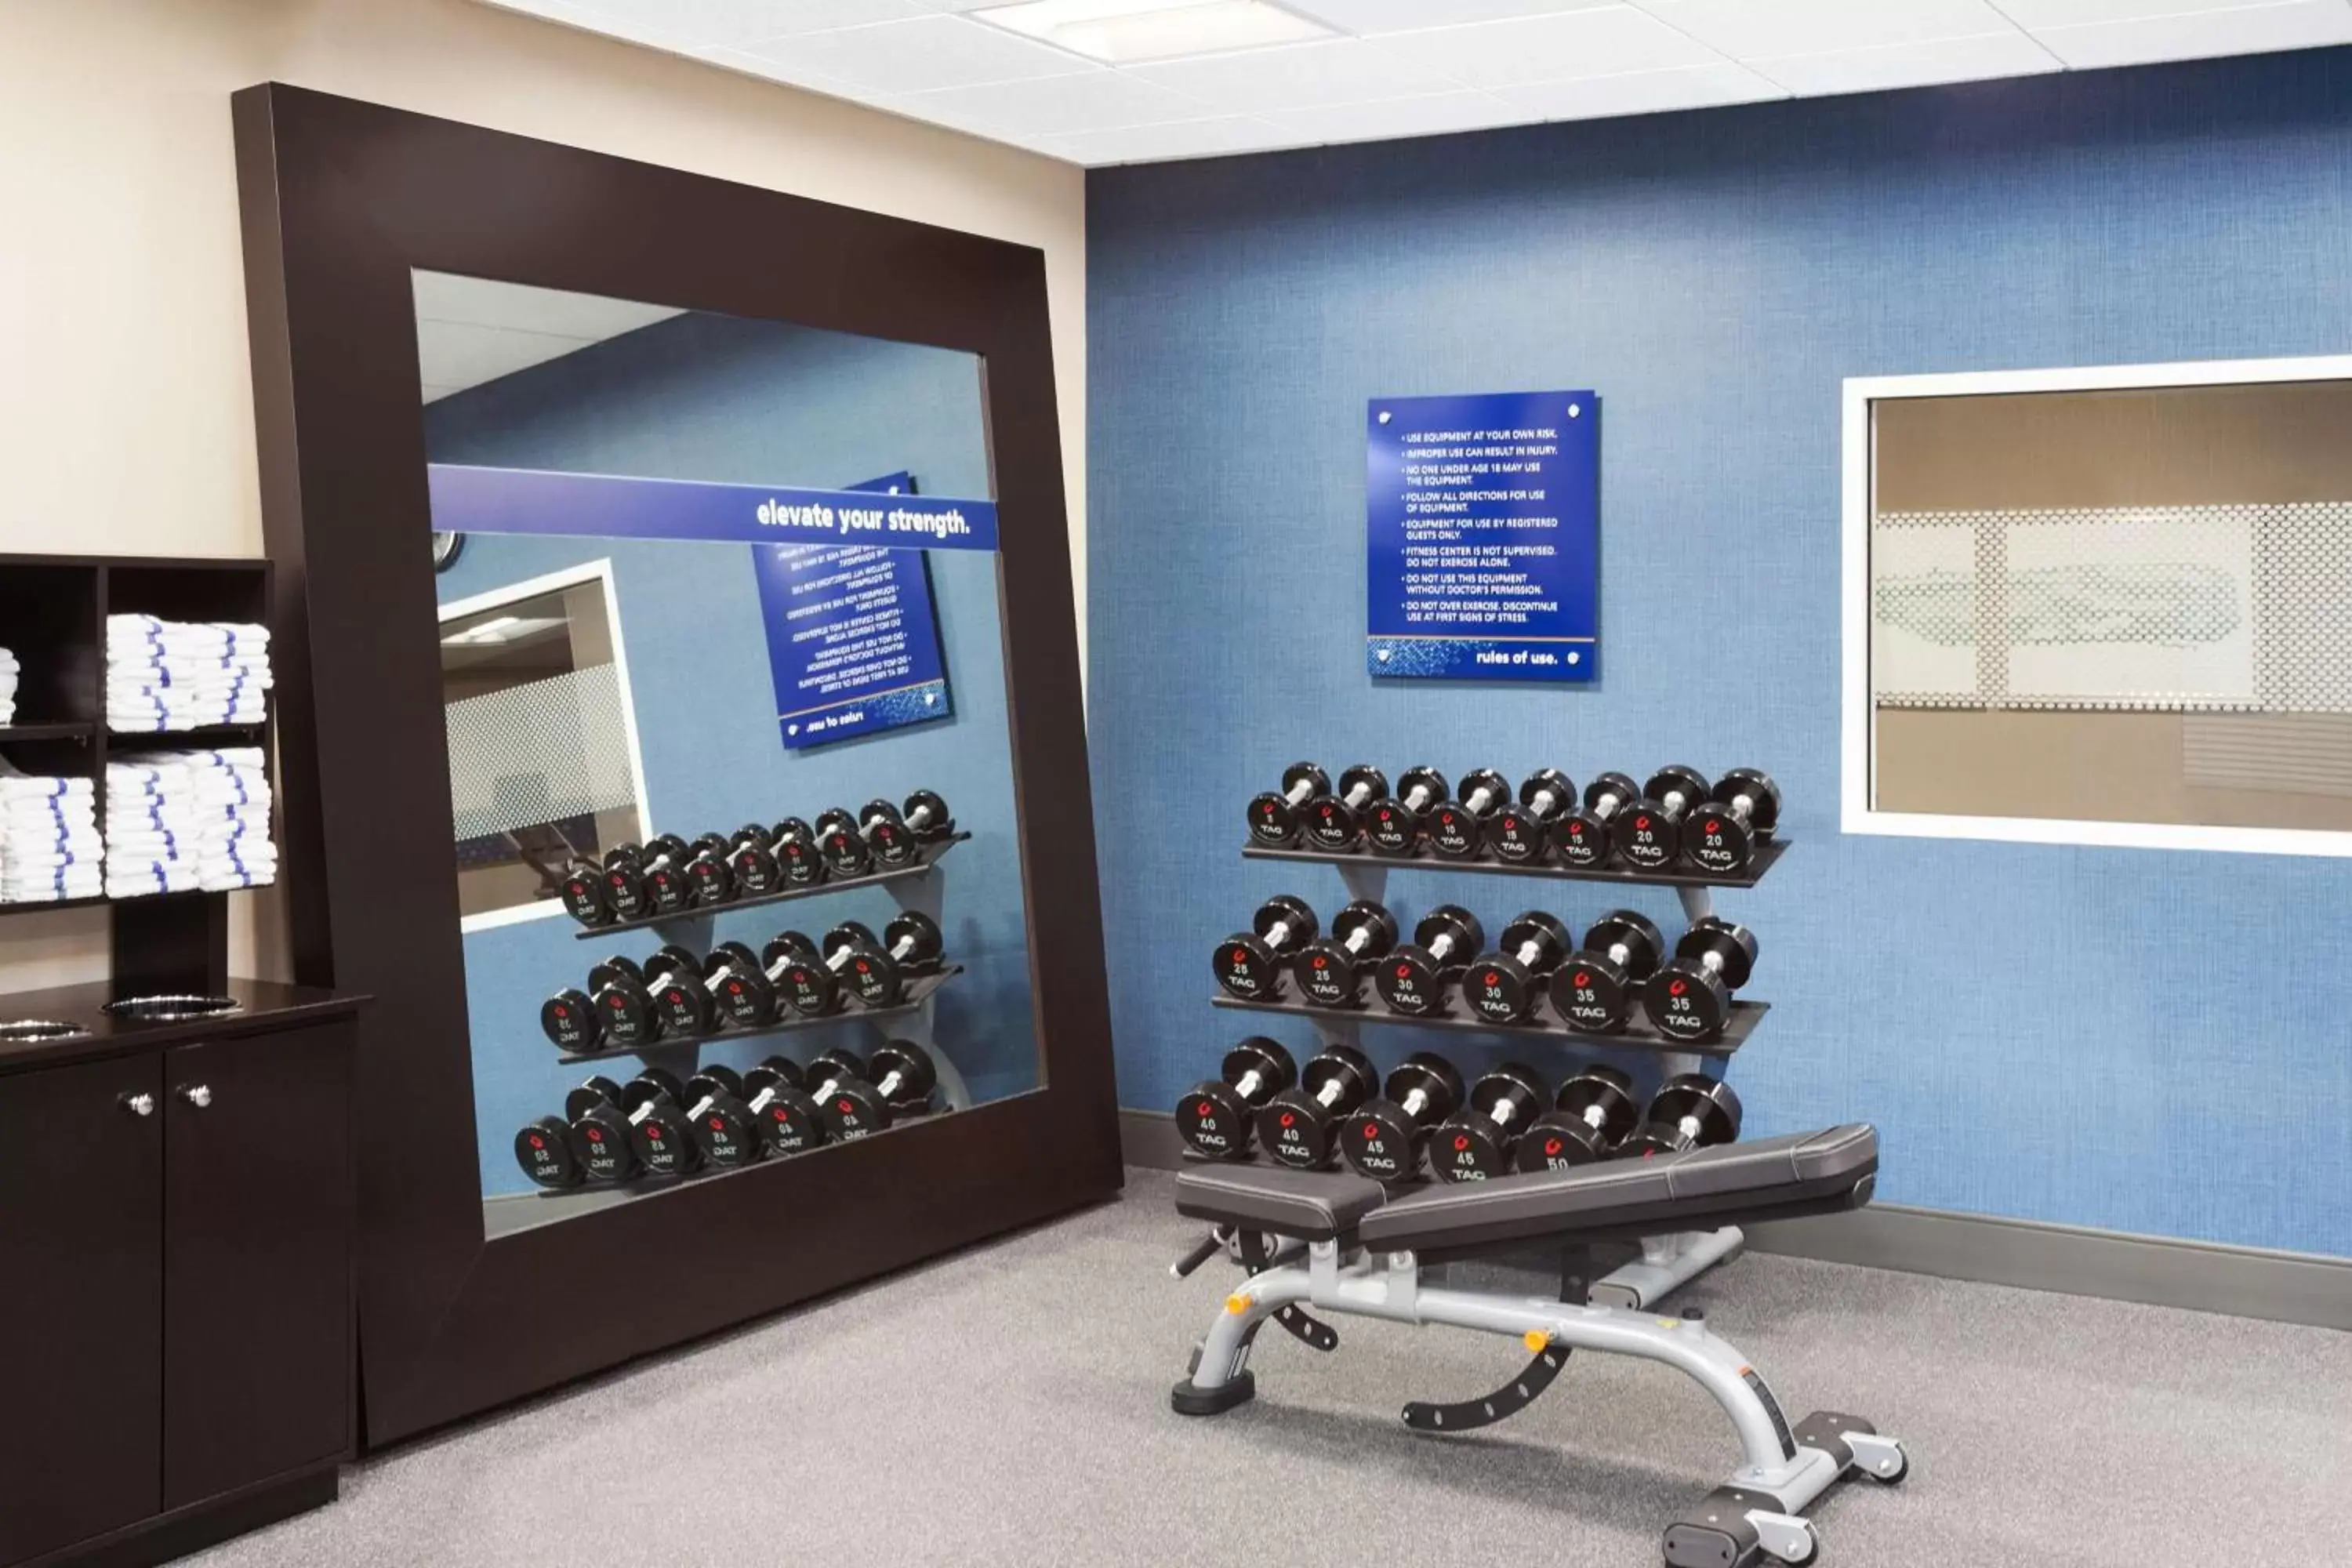 Fitness centre/facilities, Fitness Center/Facilities in Hampton Inn Kennebunk Kennebunkport Me